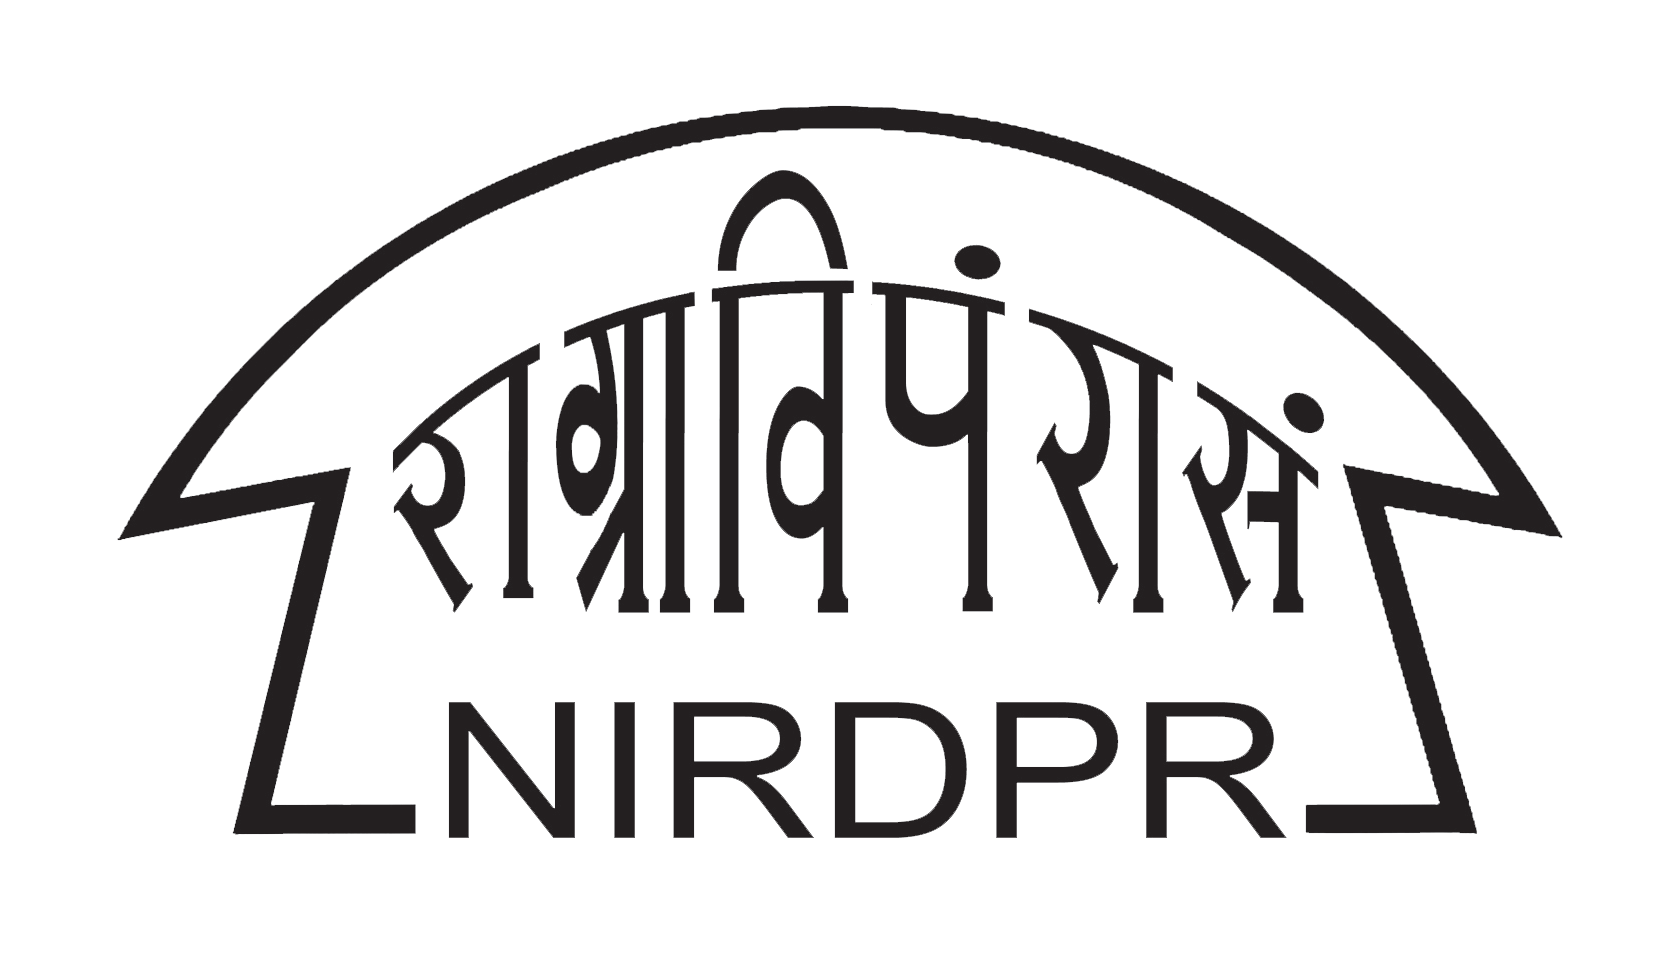 NIRD&PR